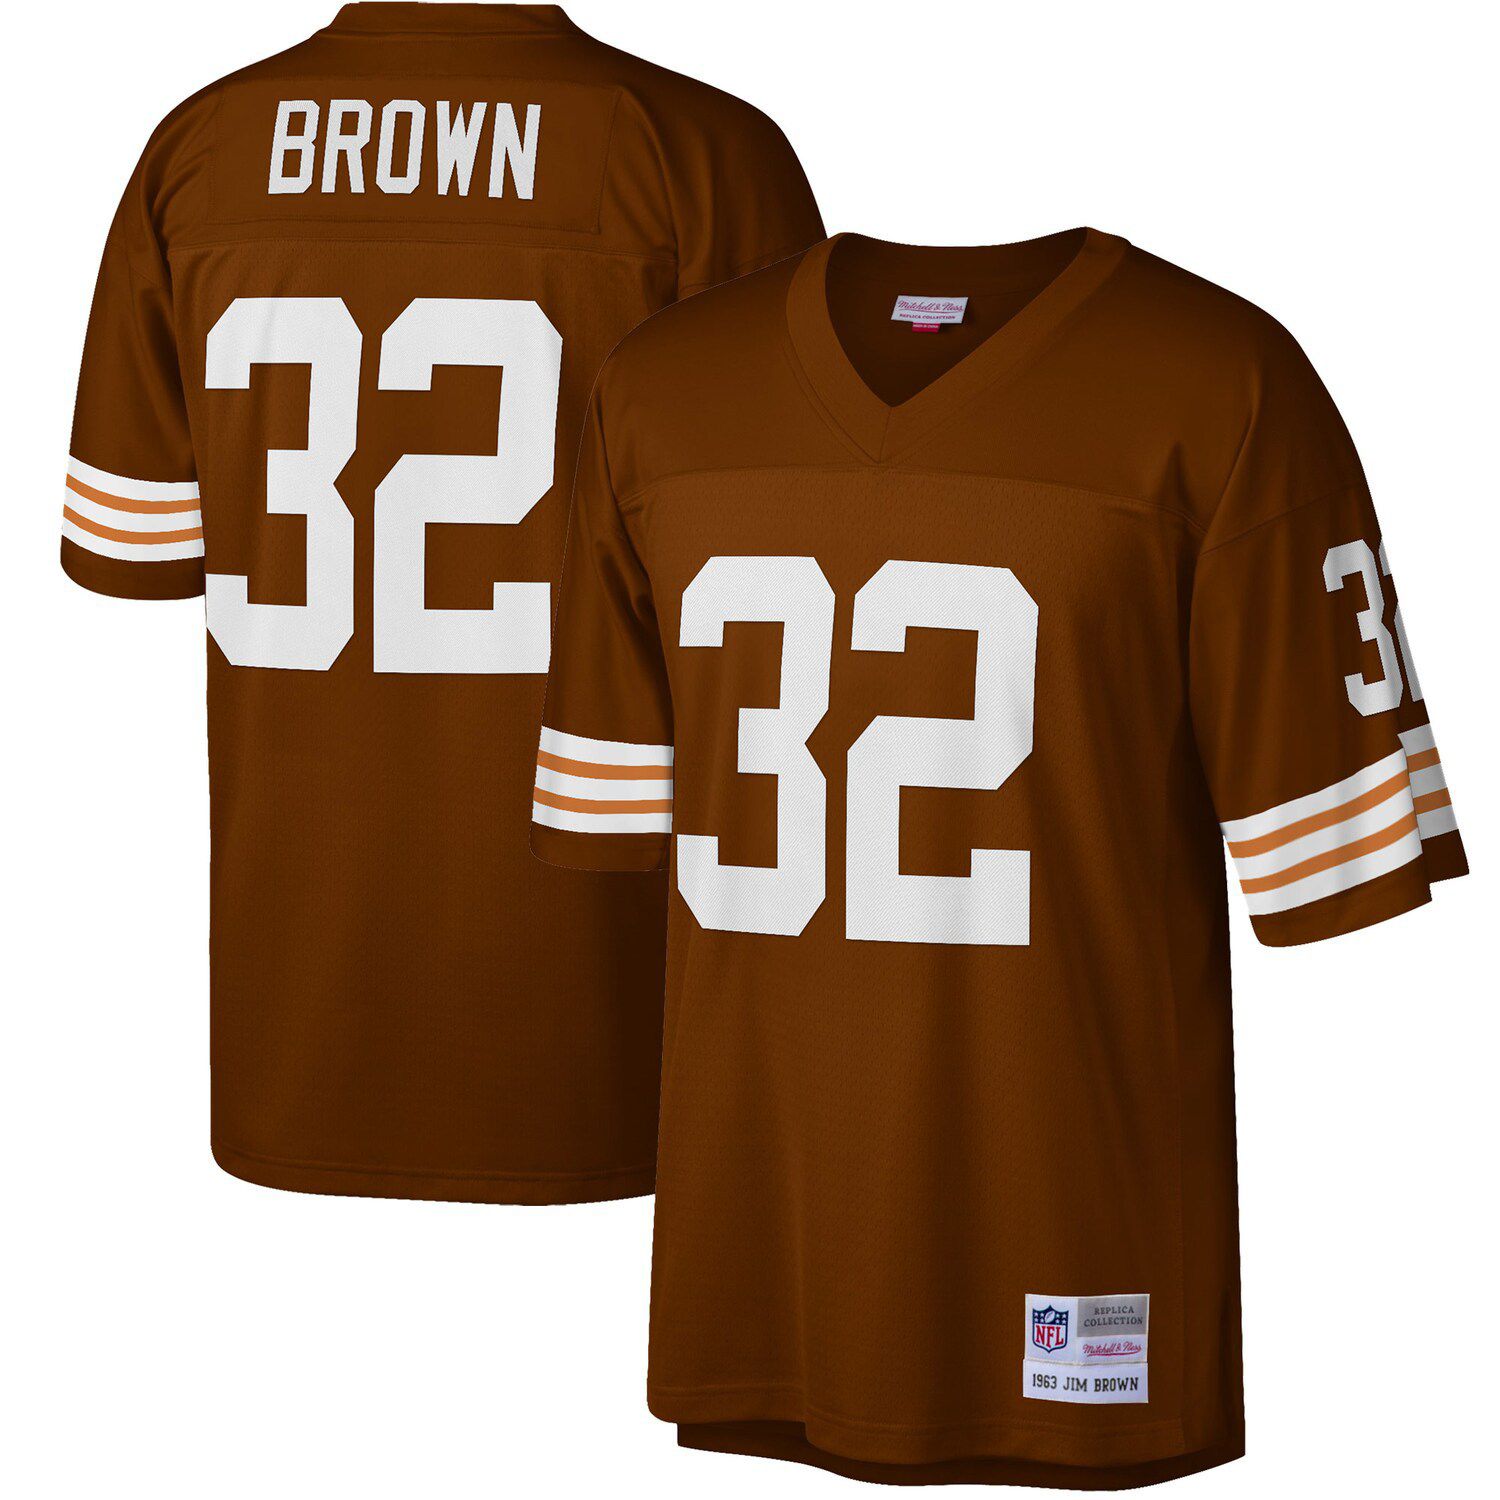 Cleveland Browns Legend Jersey